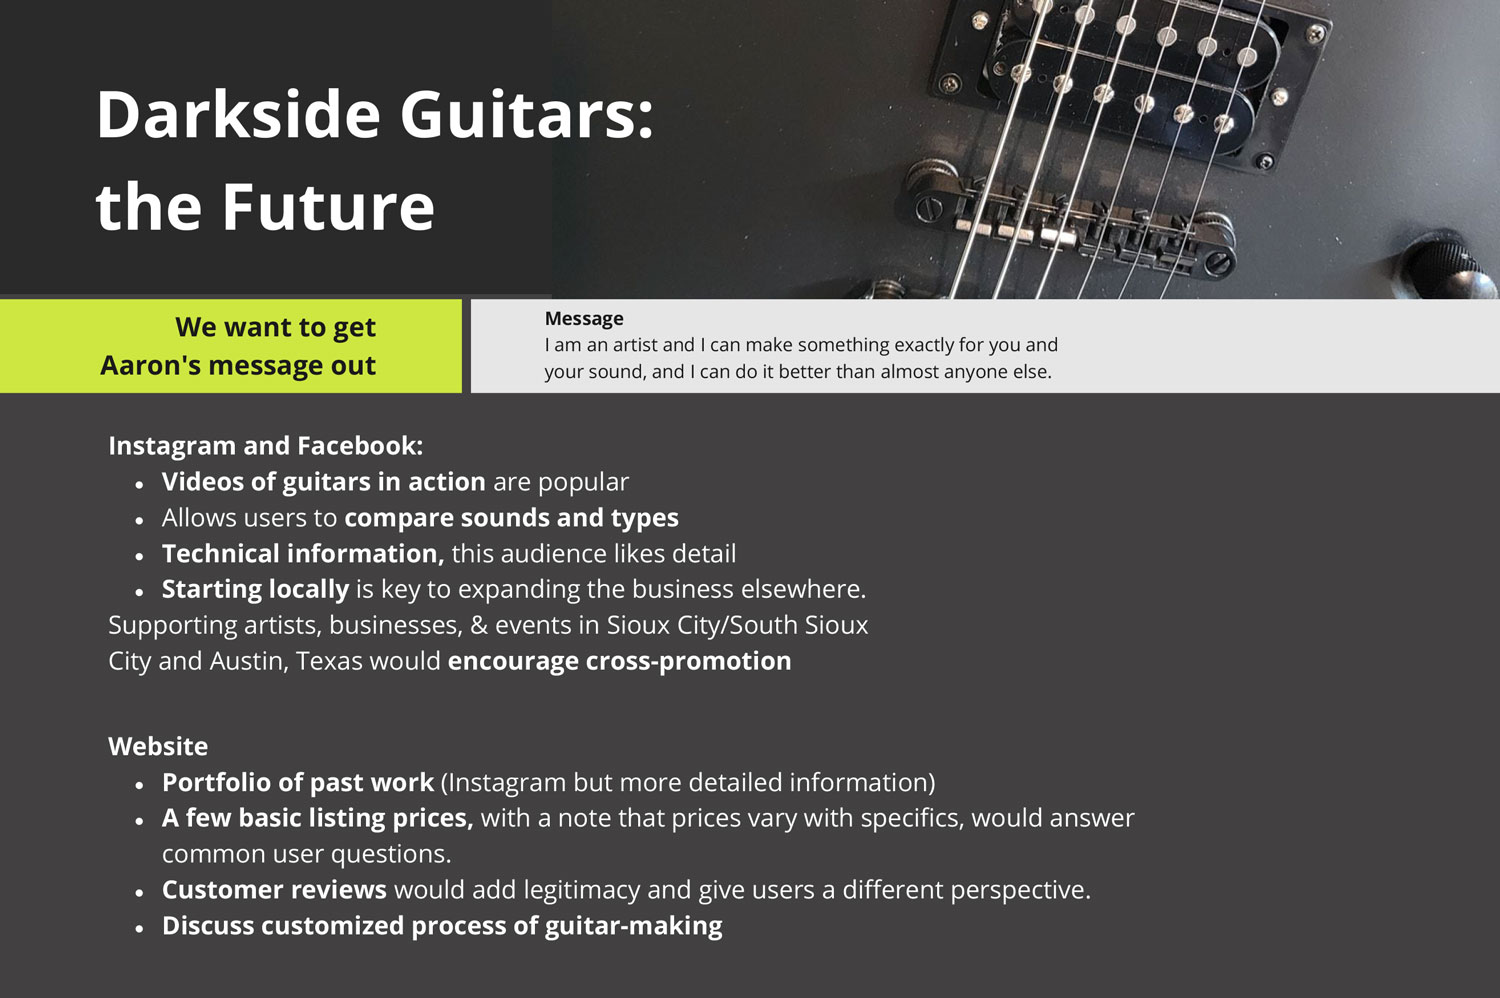 Future for Darkside Guitars: more videos, more details.